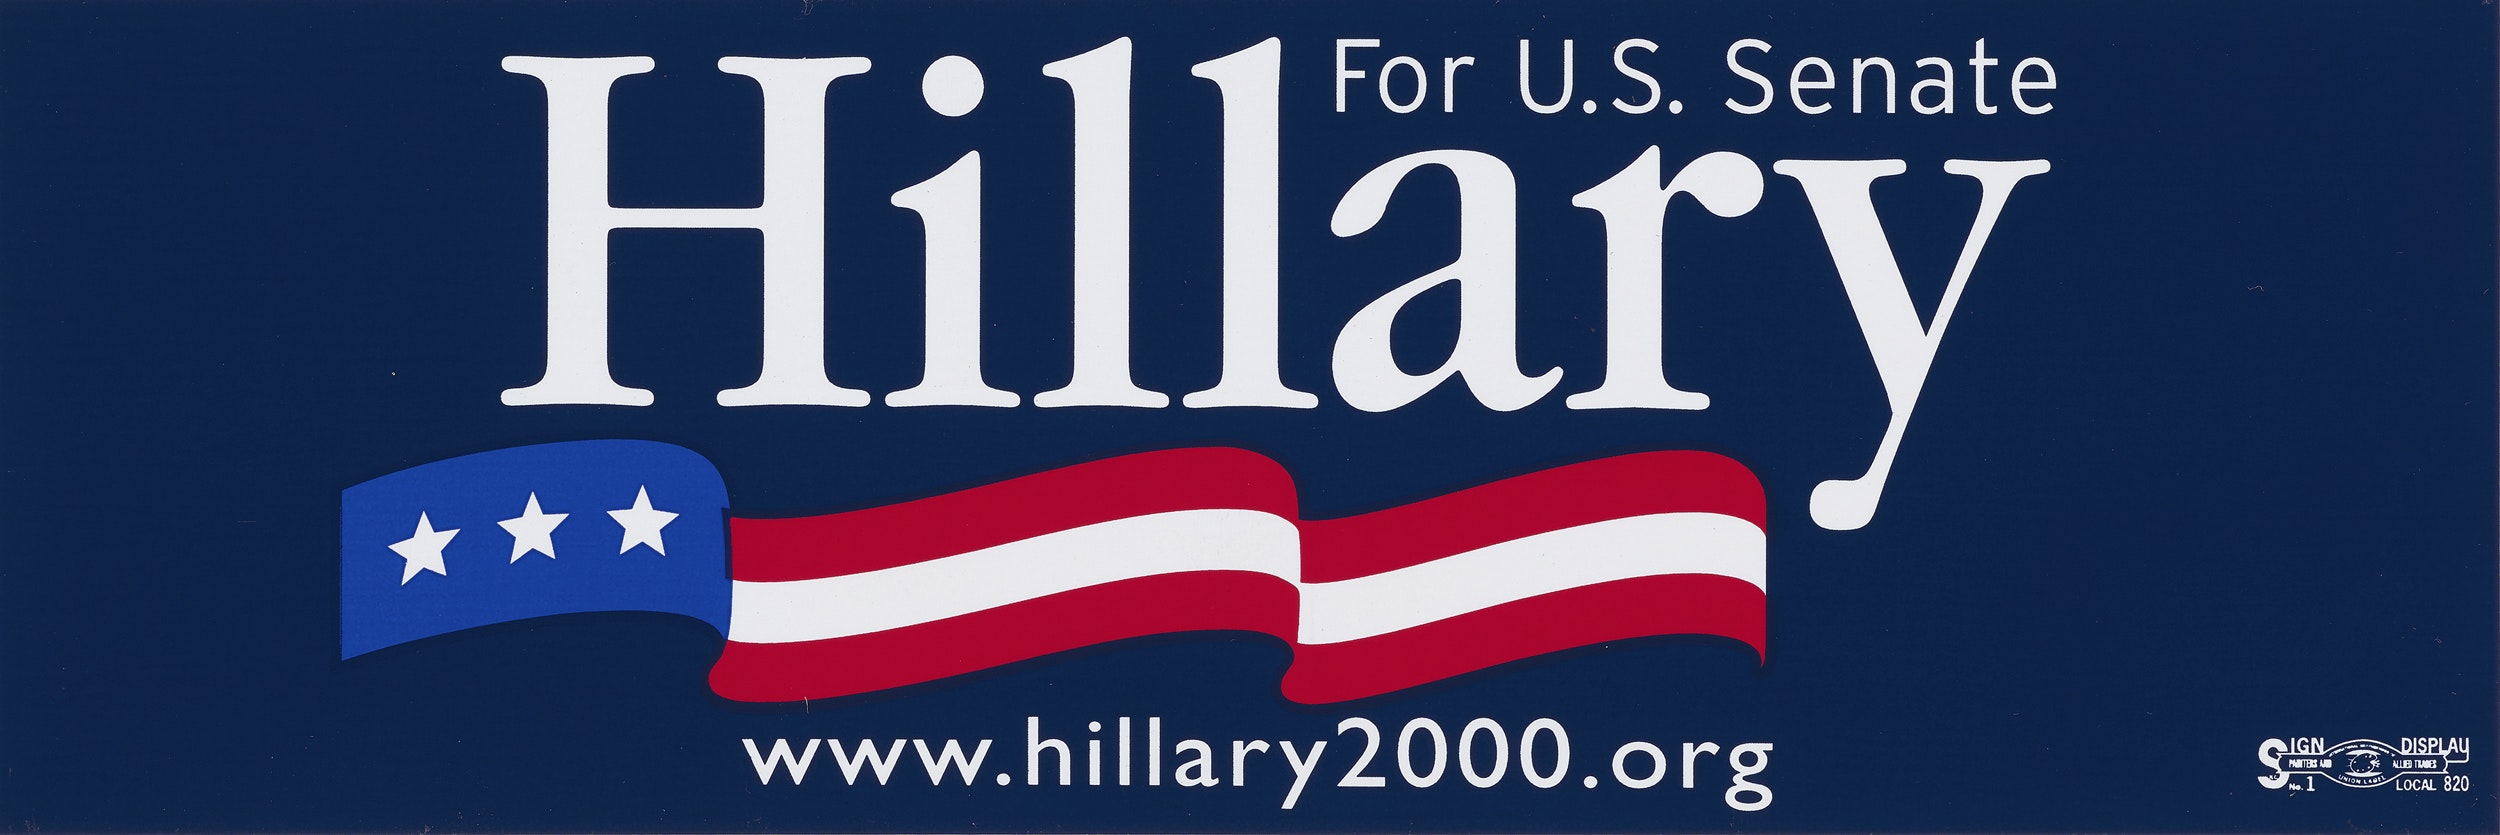 Hillary Clinton Campaign Sticker Schlesinger Memorabilia Collection